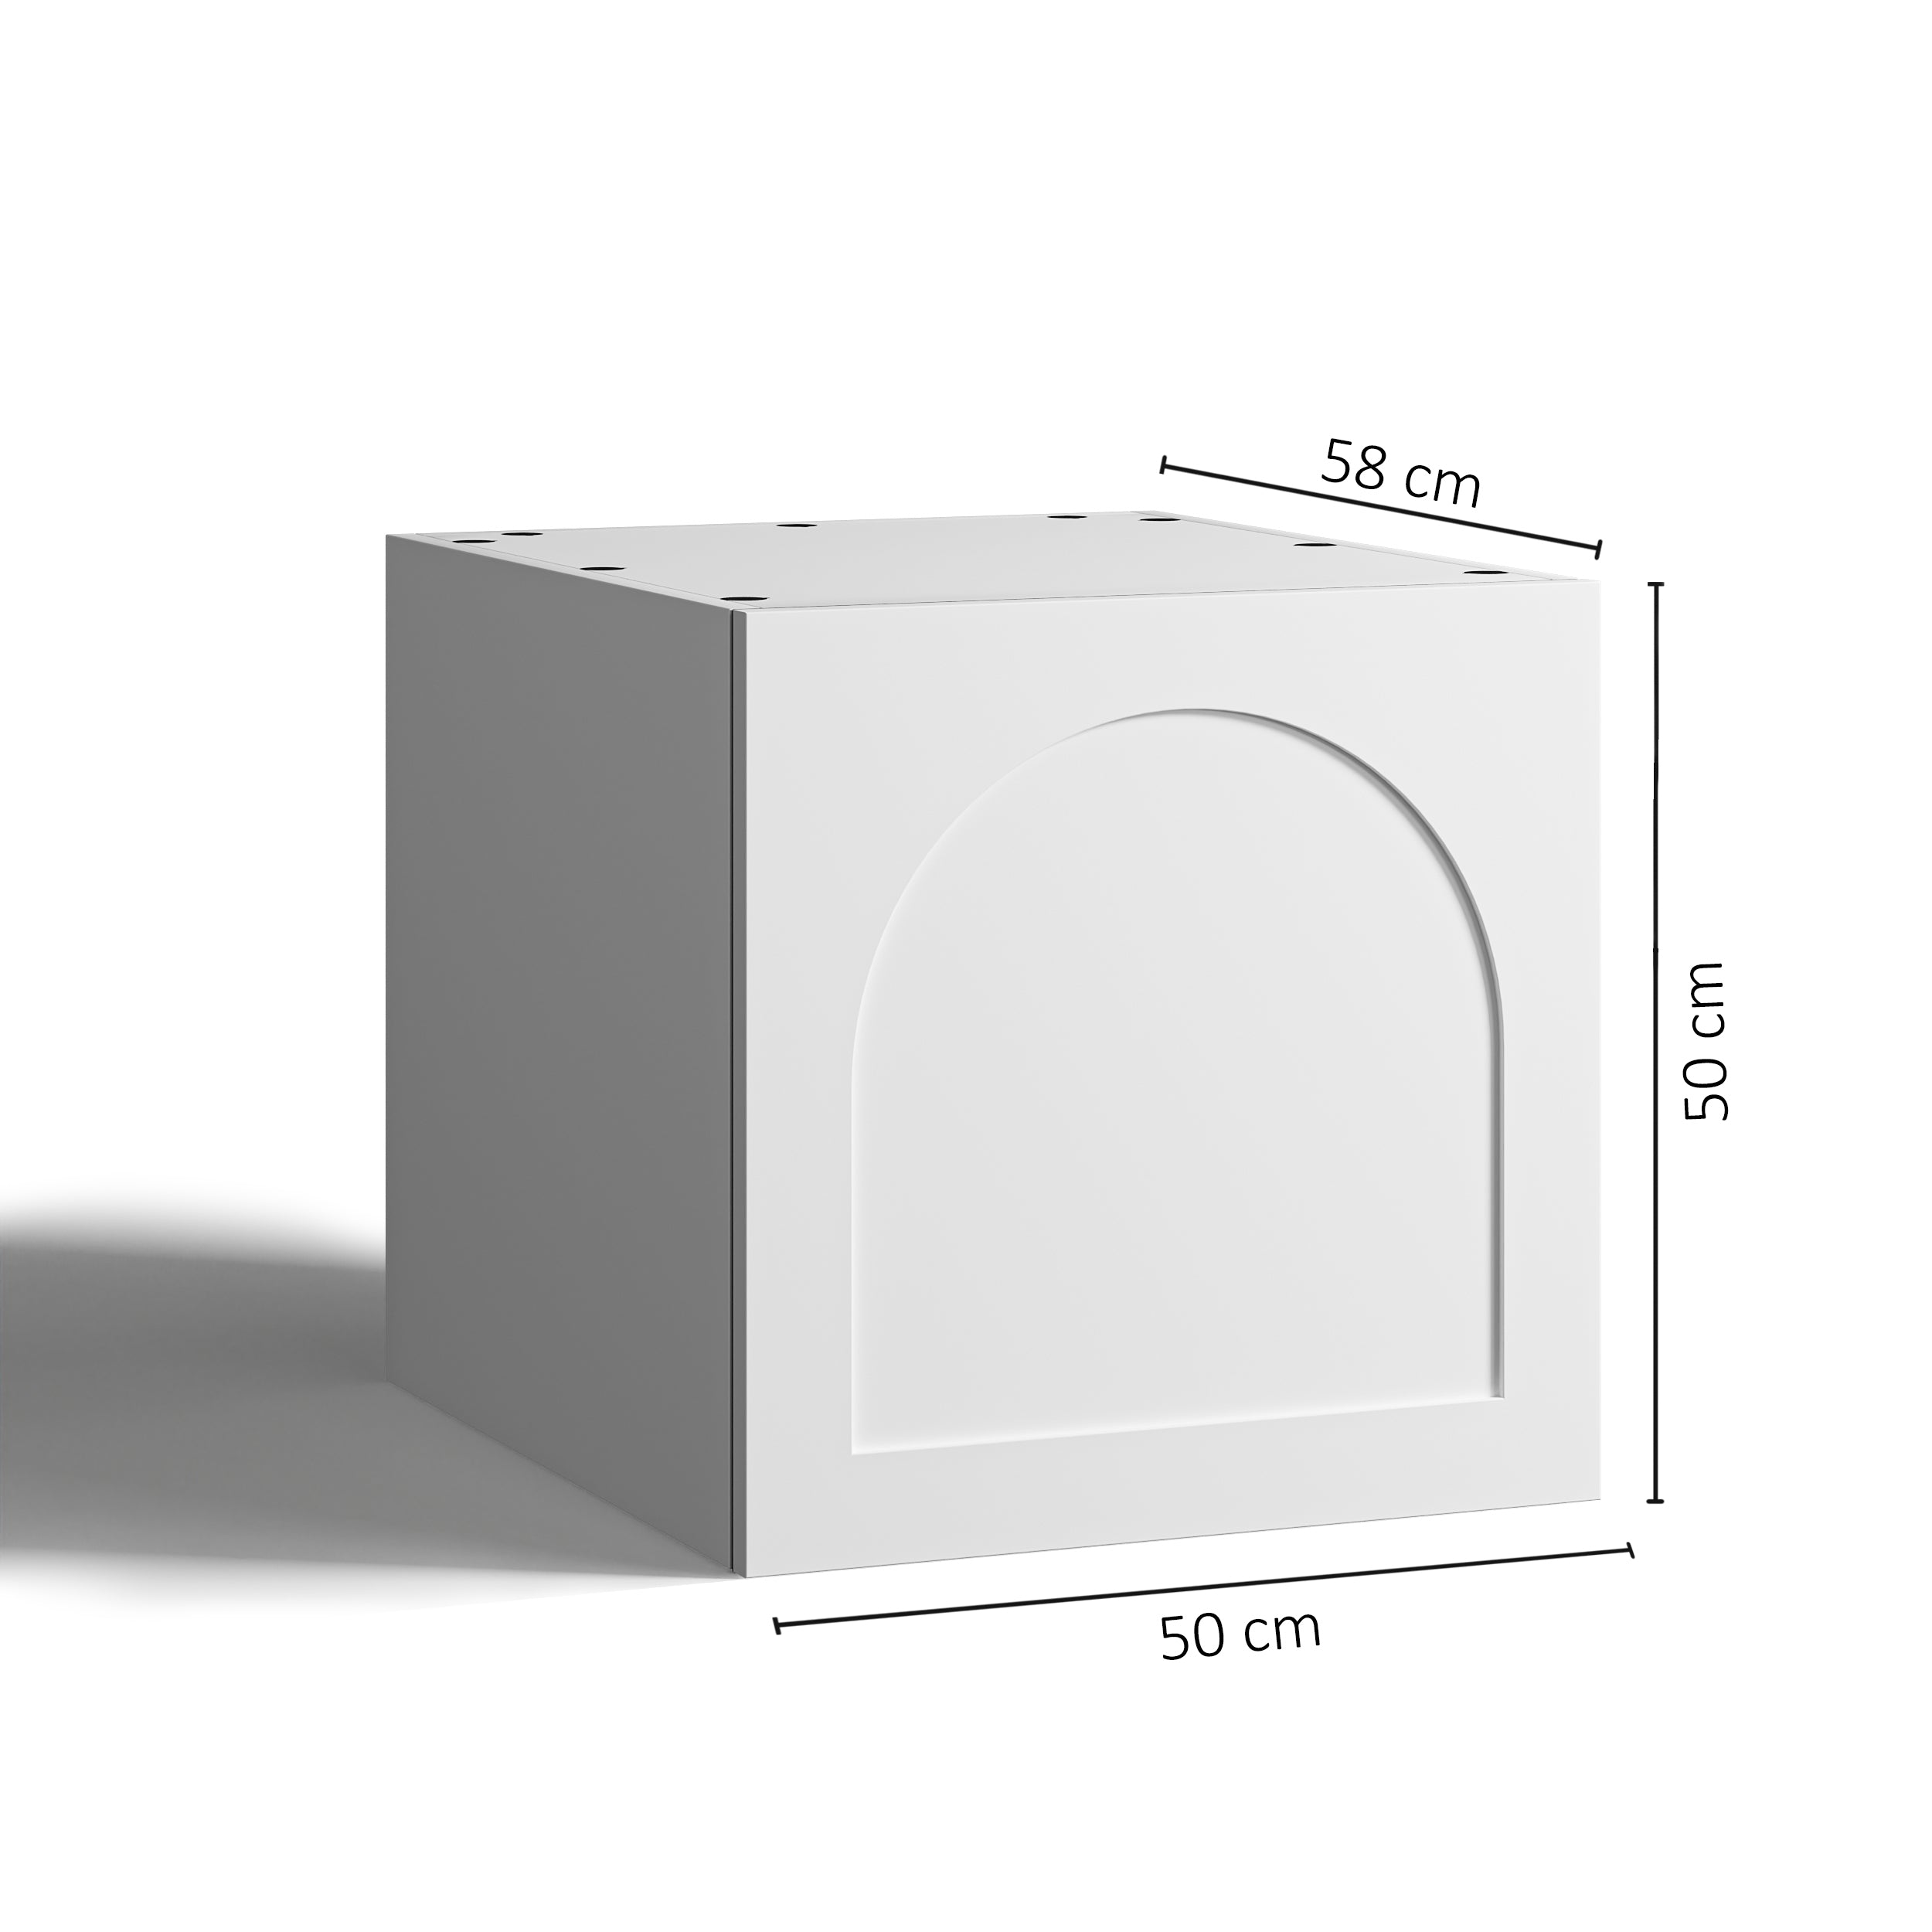 50x50 - Cabinet (58cm D) w Door - Arch - RAW - PAX